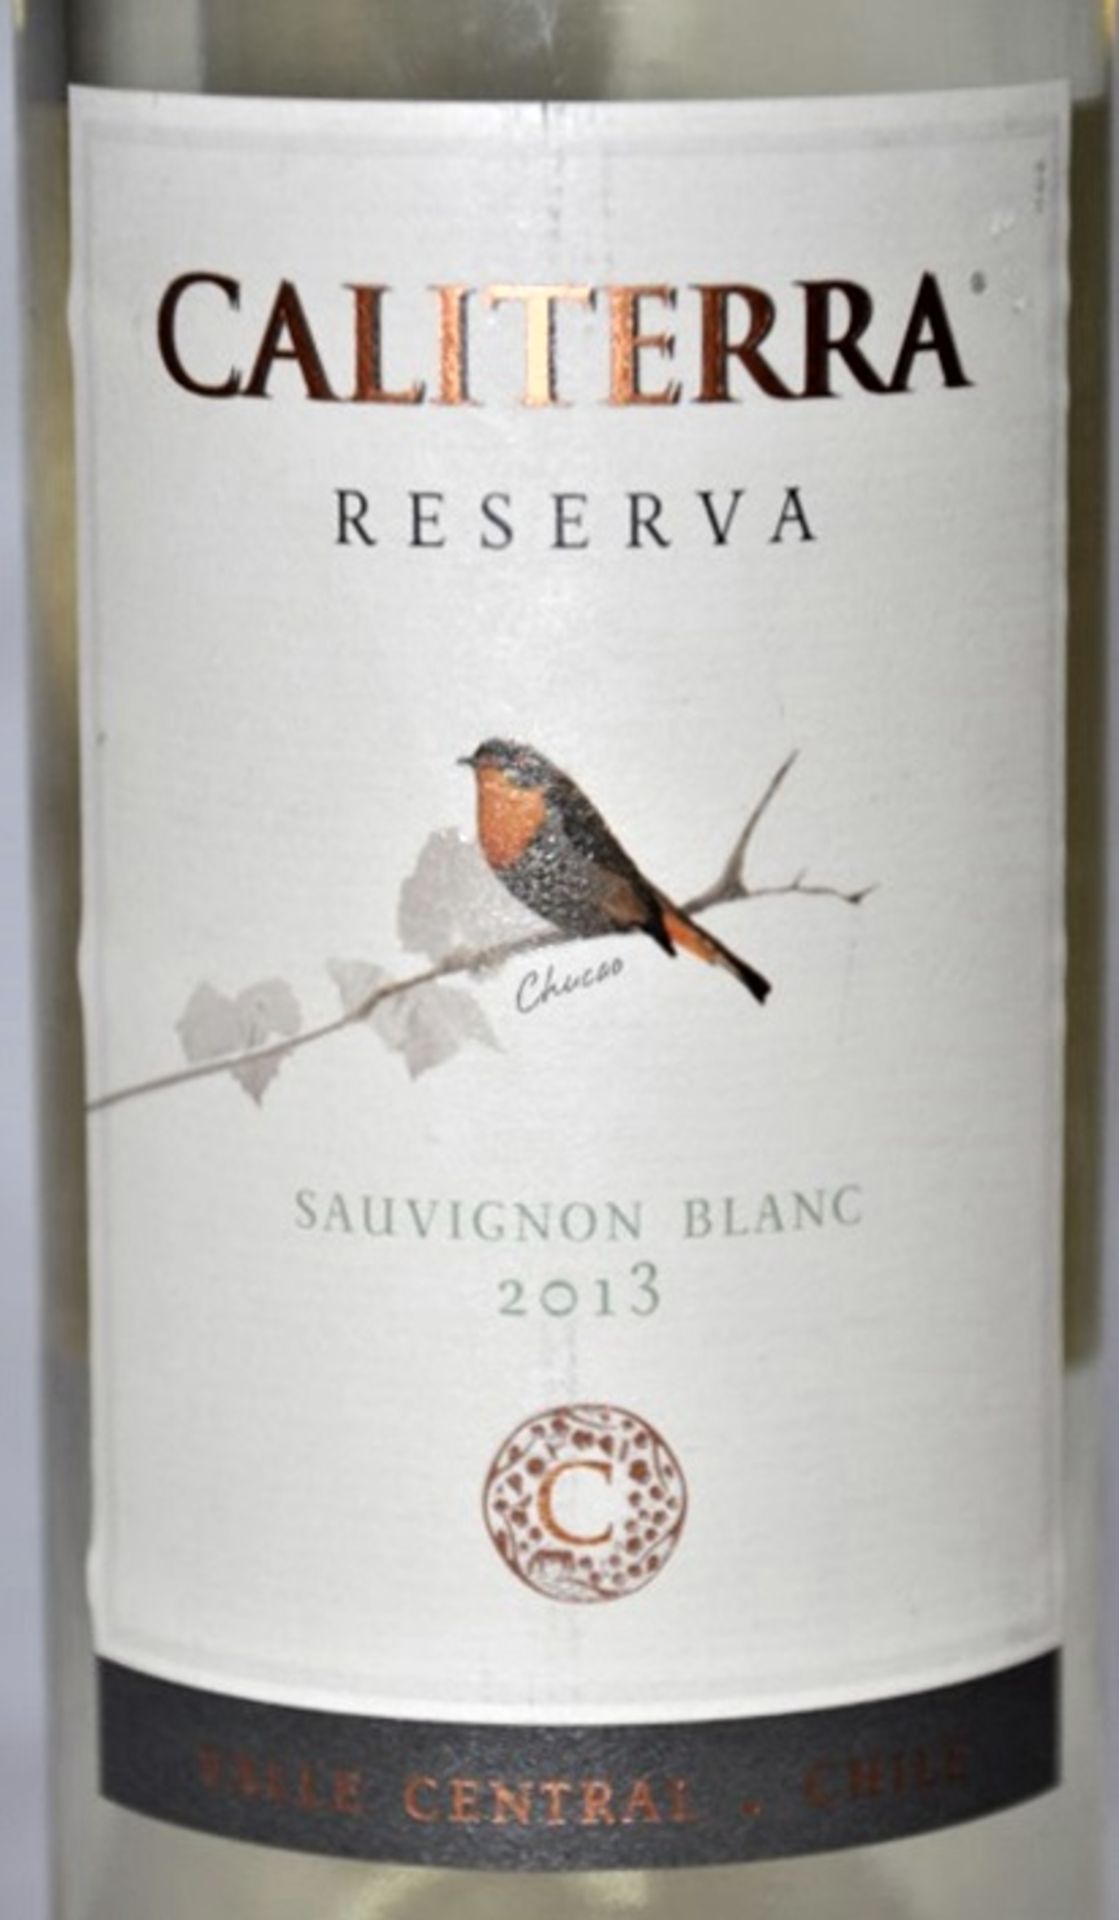 3 x 2013 Caliterra Reserva Sauvignon Blanc, Curico Valley, Chile - 2013 – Bottle Size 75cl - - Image 3 of 3